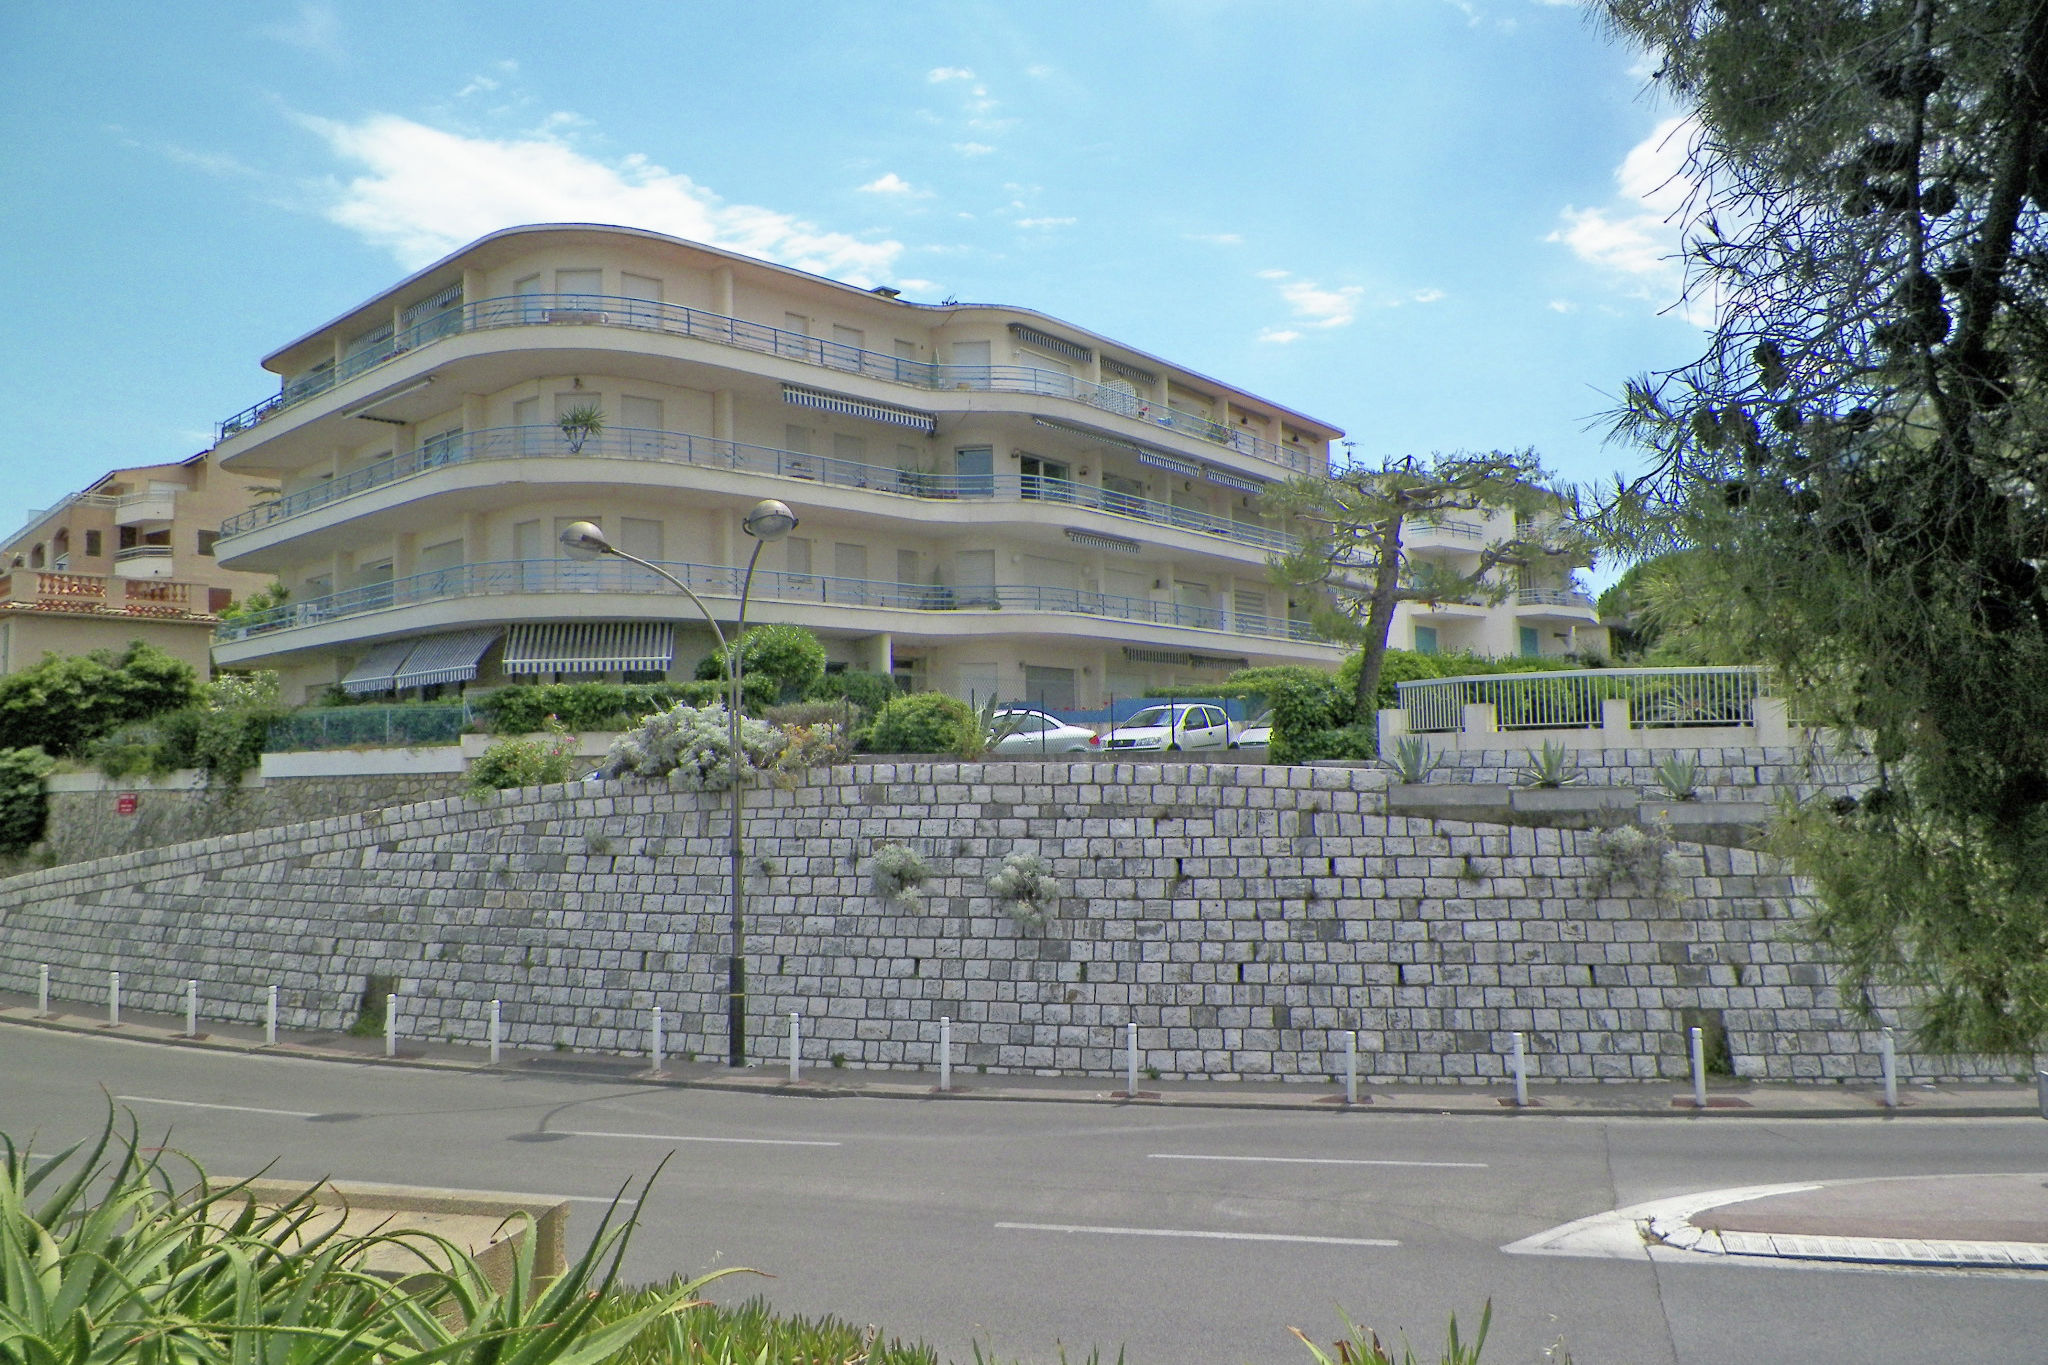 Appartement moderne avec terrasse privée à Antibes